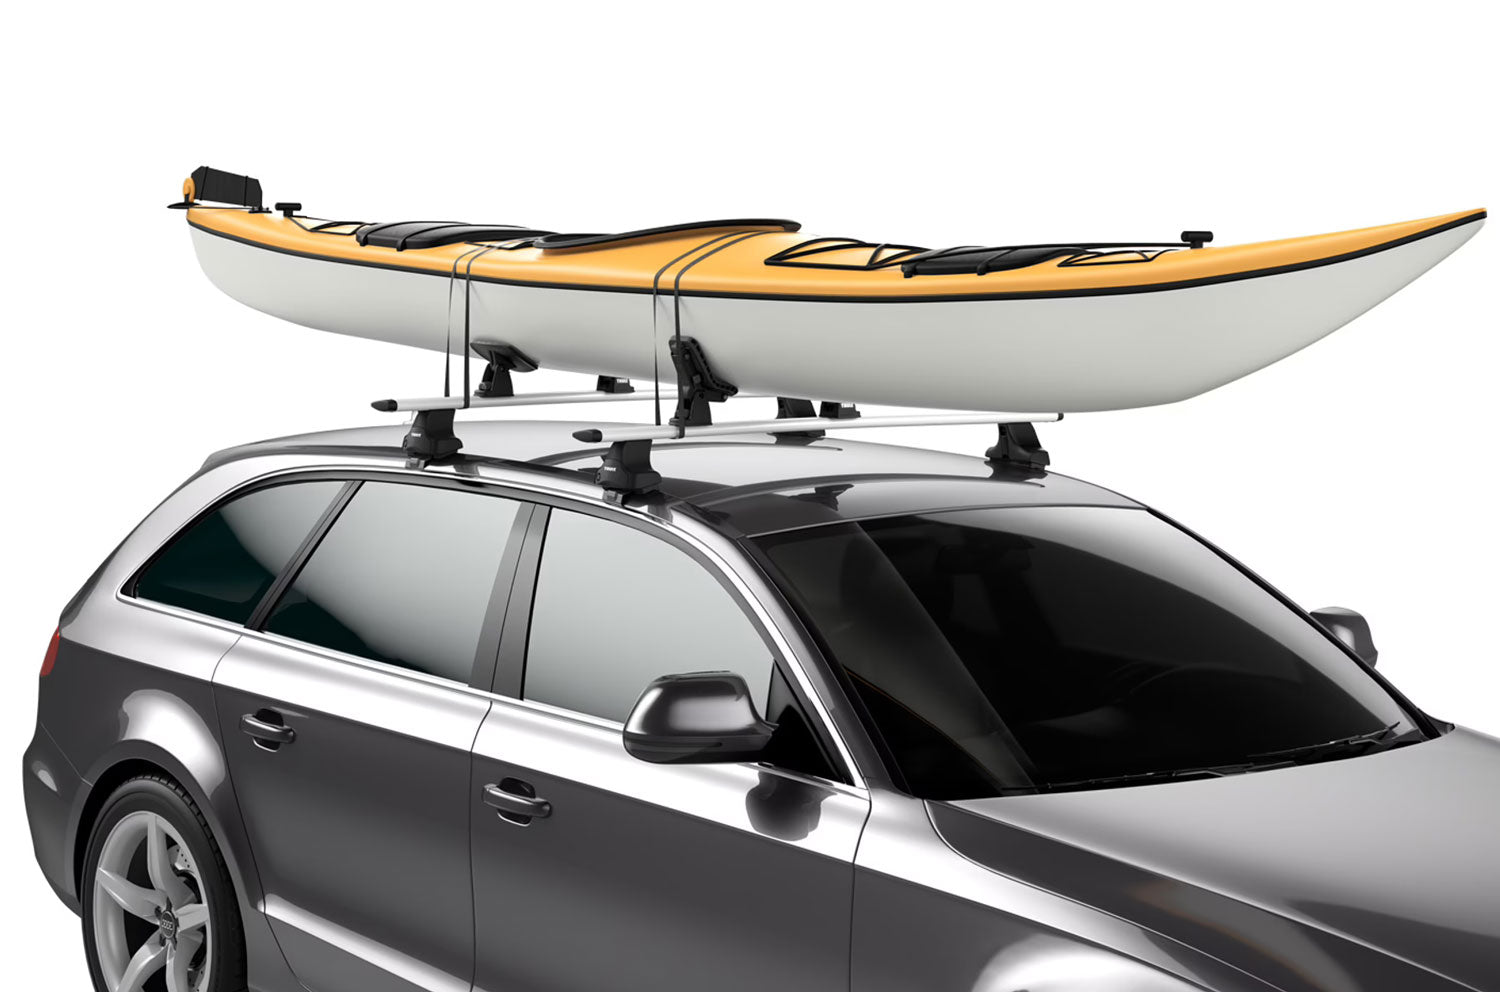 Thule Dock Glide kayak carrier in use demonstraitng the versatility